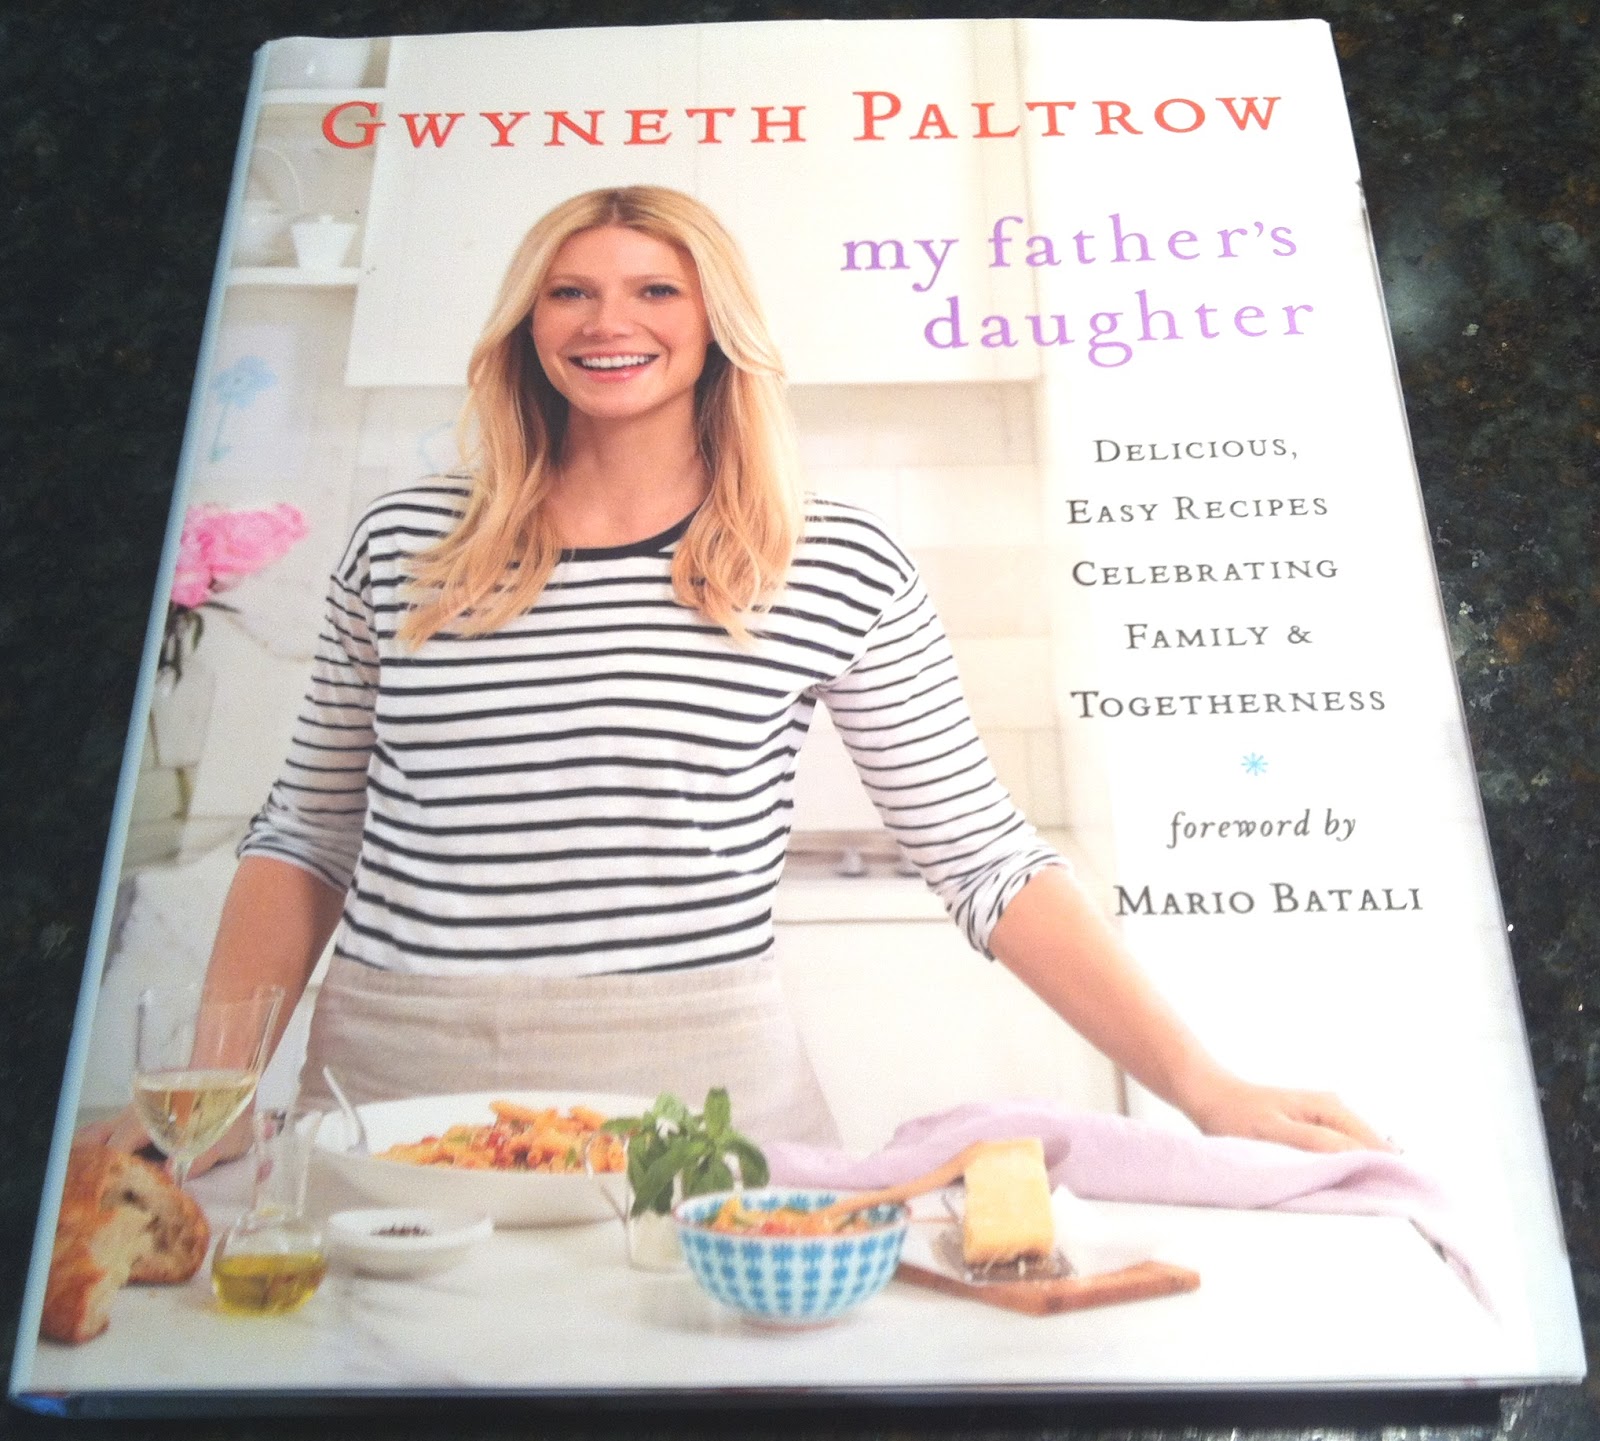 http://4.bp.blogspot.com/-2Ci-cD2SPfM/UAygRwrcieI/AAAAAAAAAmM/pOaSz3xrCZg/s1600/gwyneth+paltrow+cookbook.JPG